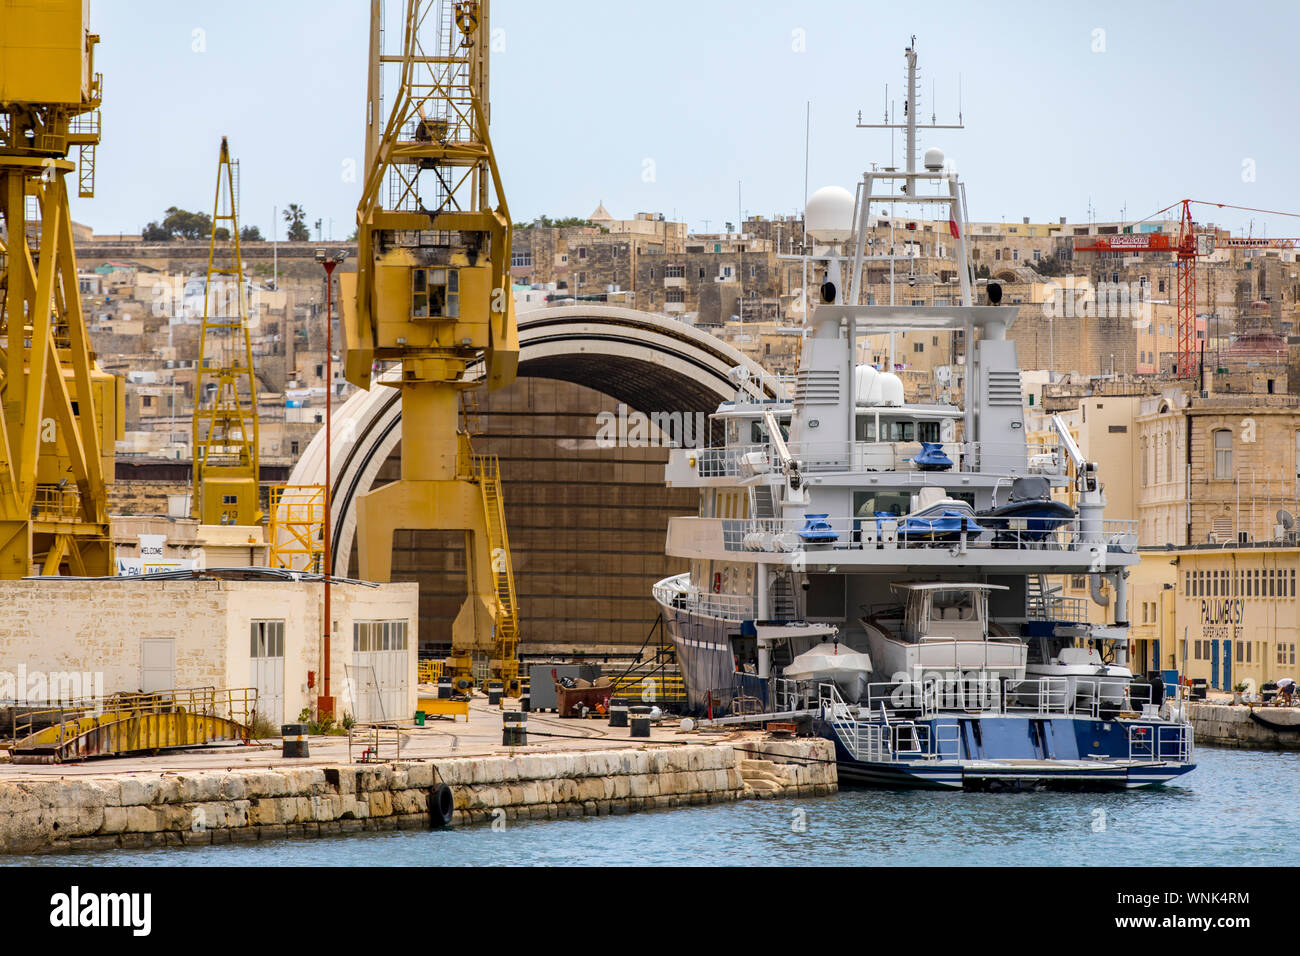 Malta, Grand Harbour, port with shipyards, docks, workshops for ships, Stock Photo